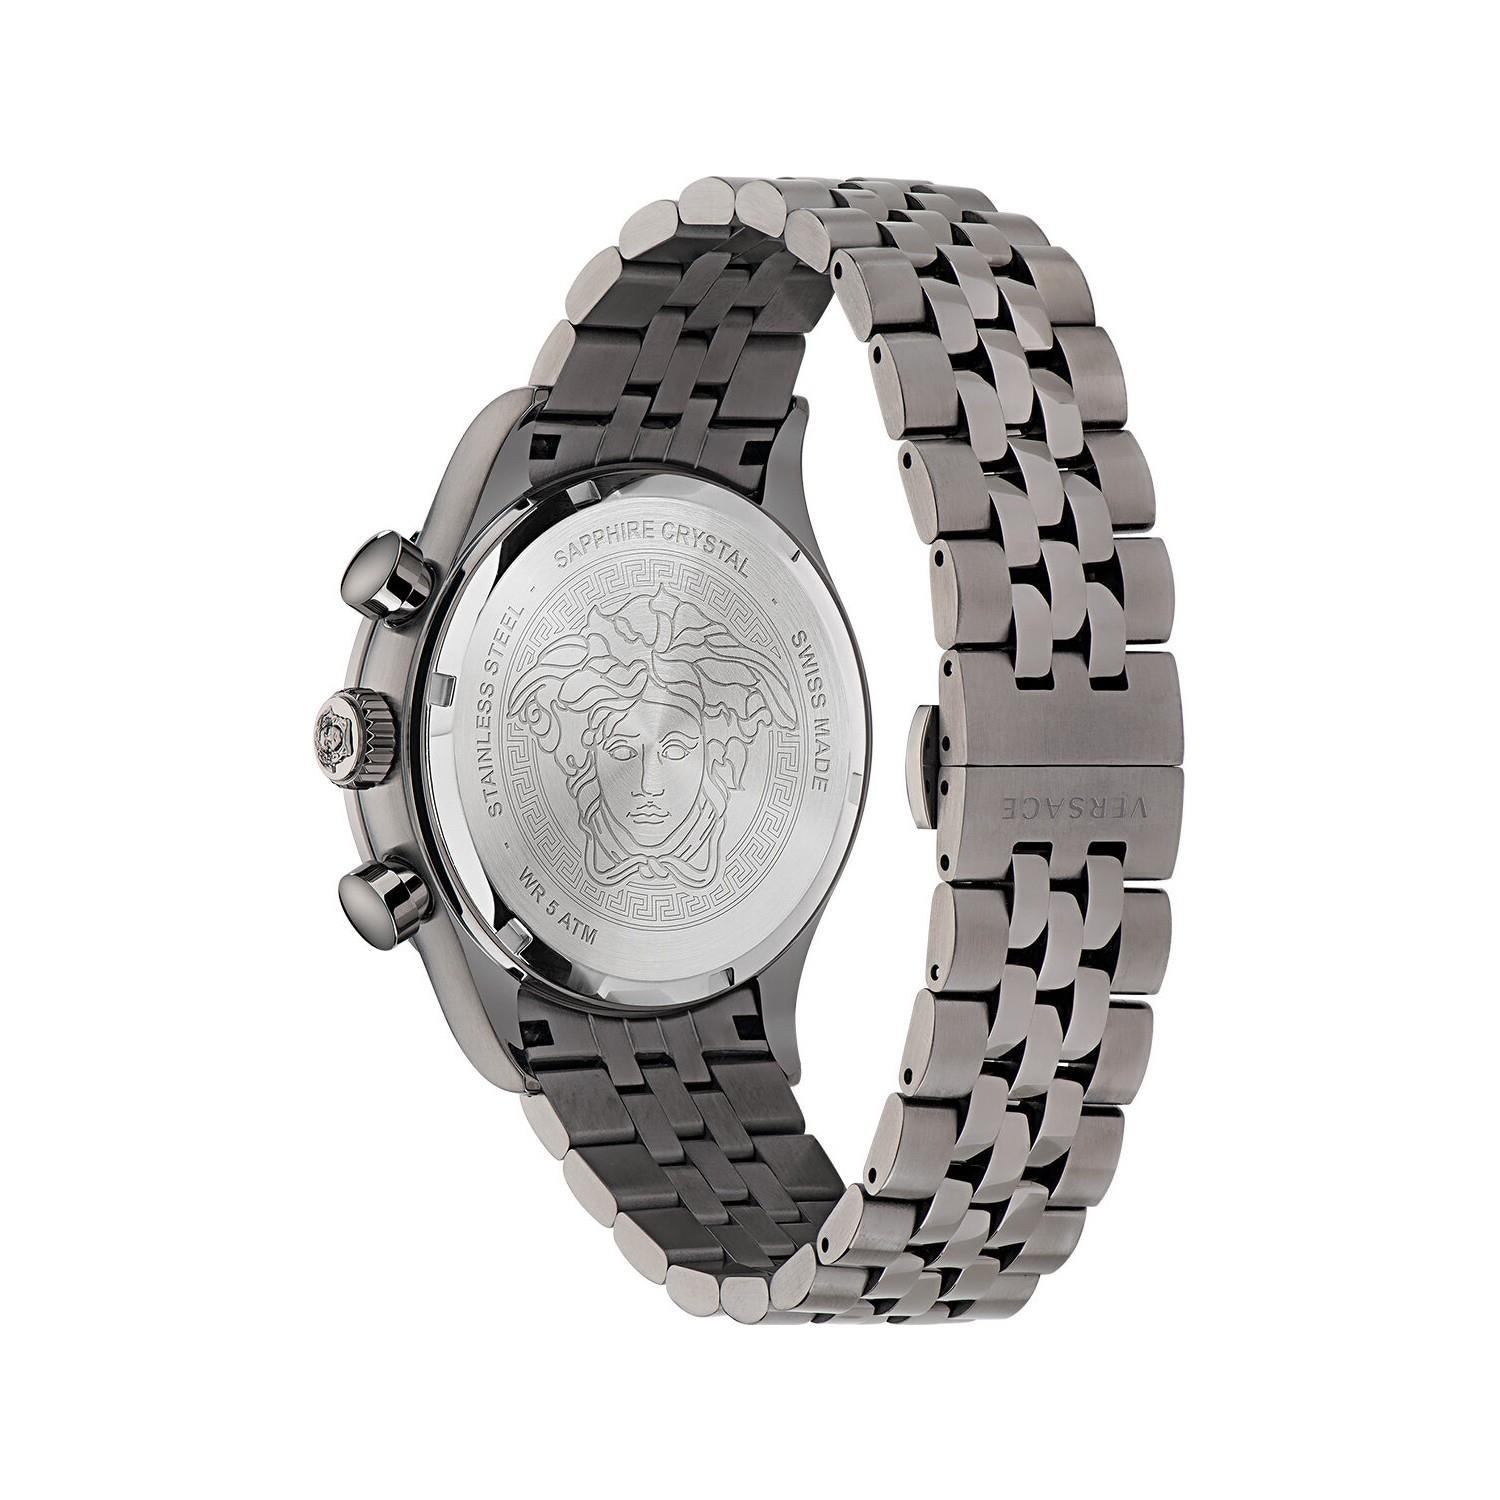 Versace VE2U00722 Hellenyium Chrono Chronograph Men's Watch - Watch Home™